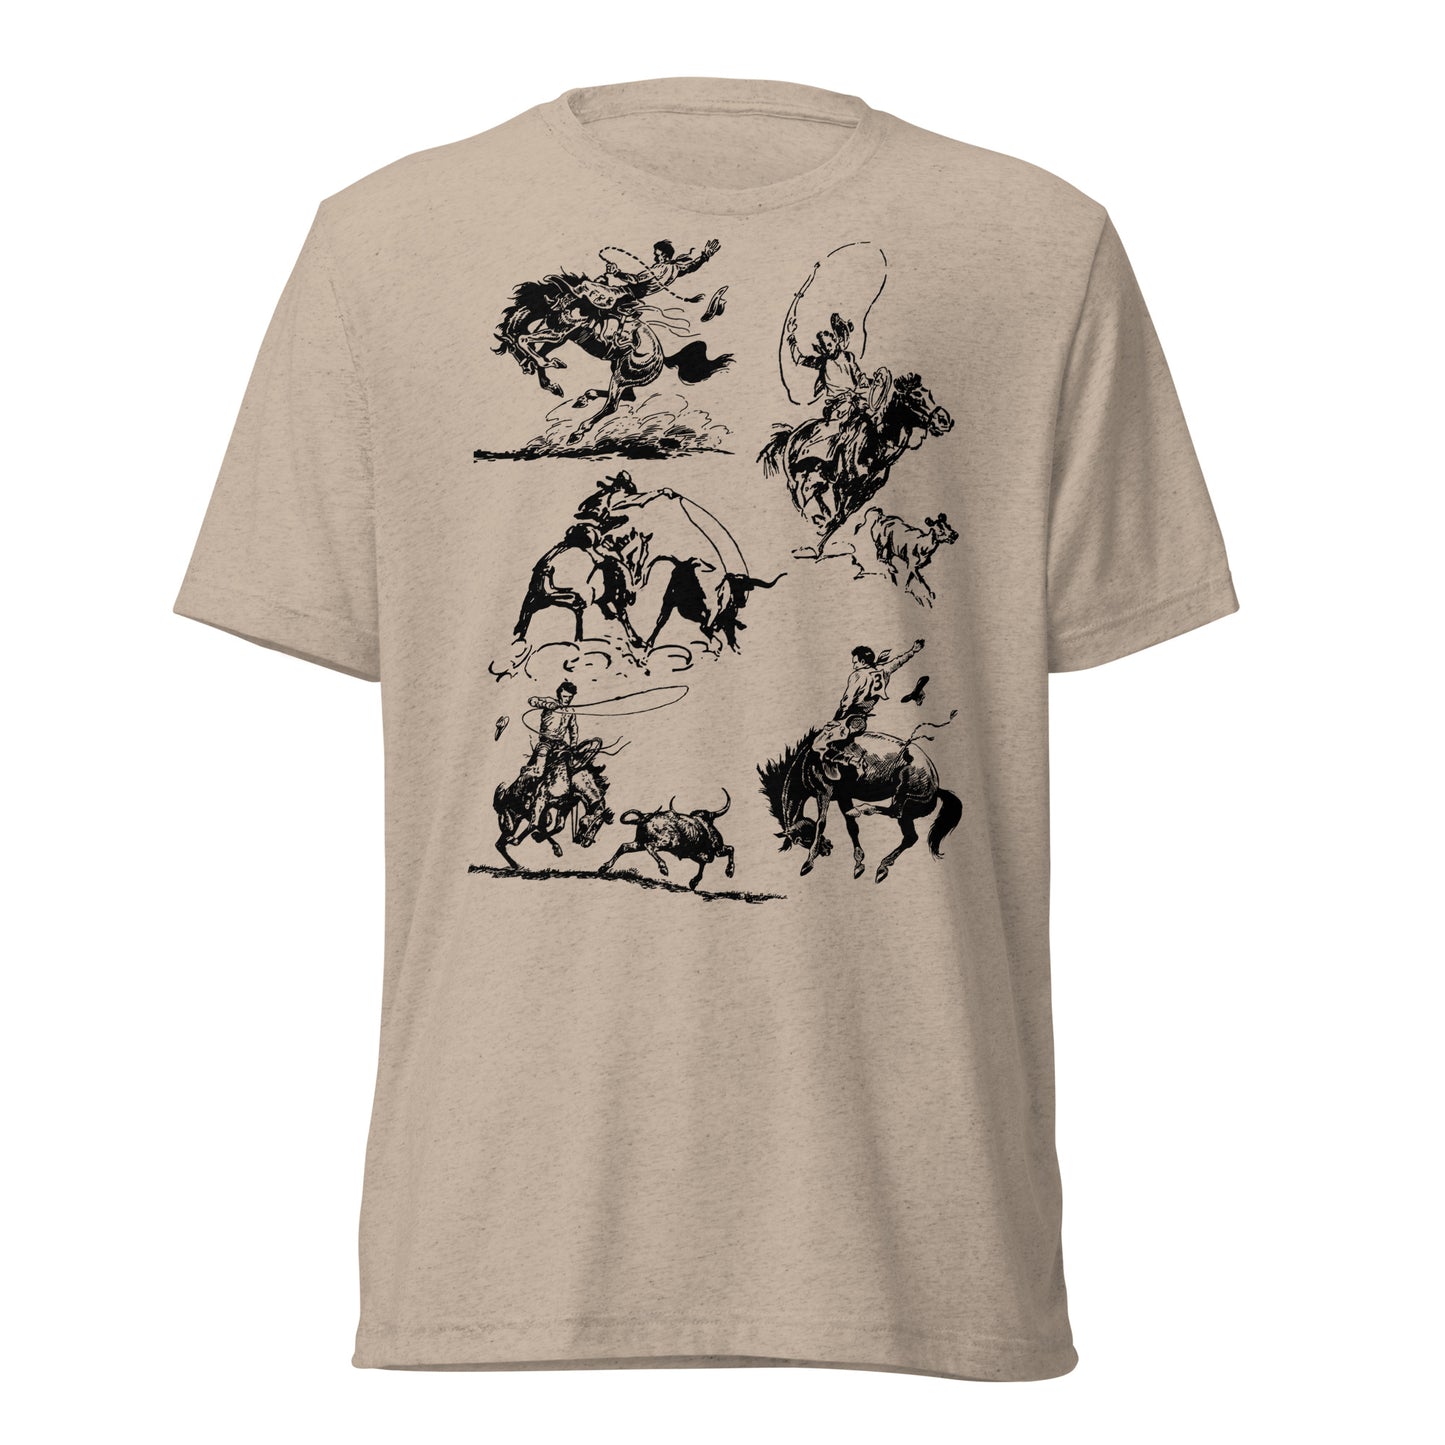 Wild West Silhouette Short sleeve t-shirt